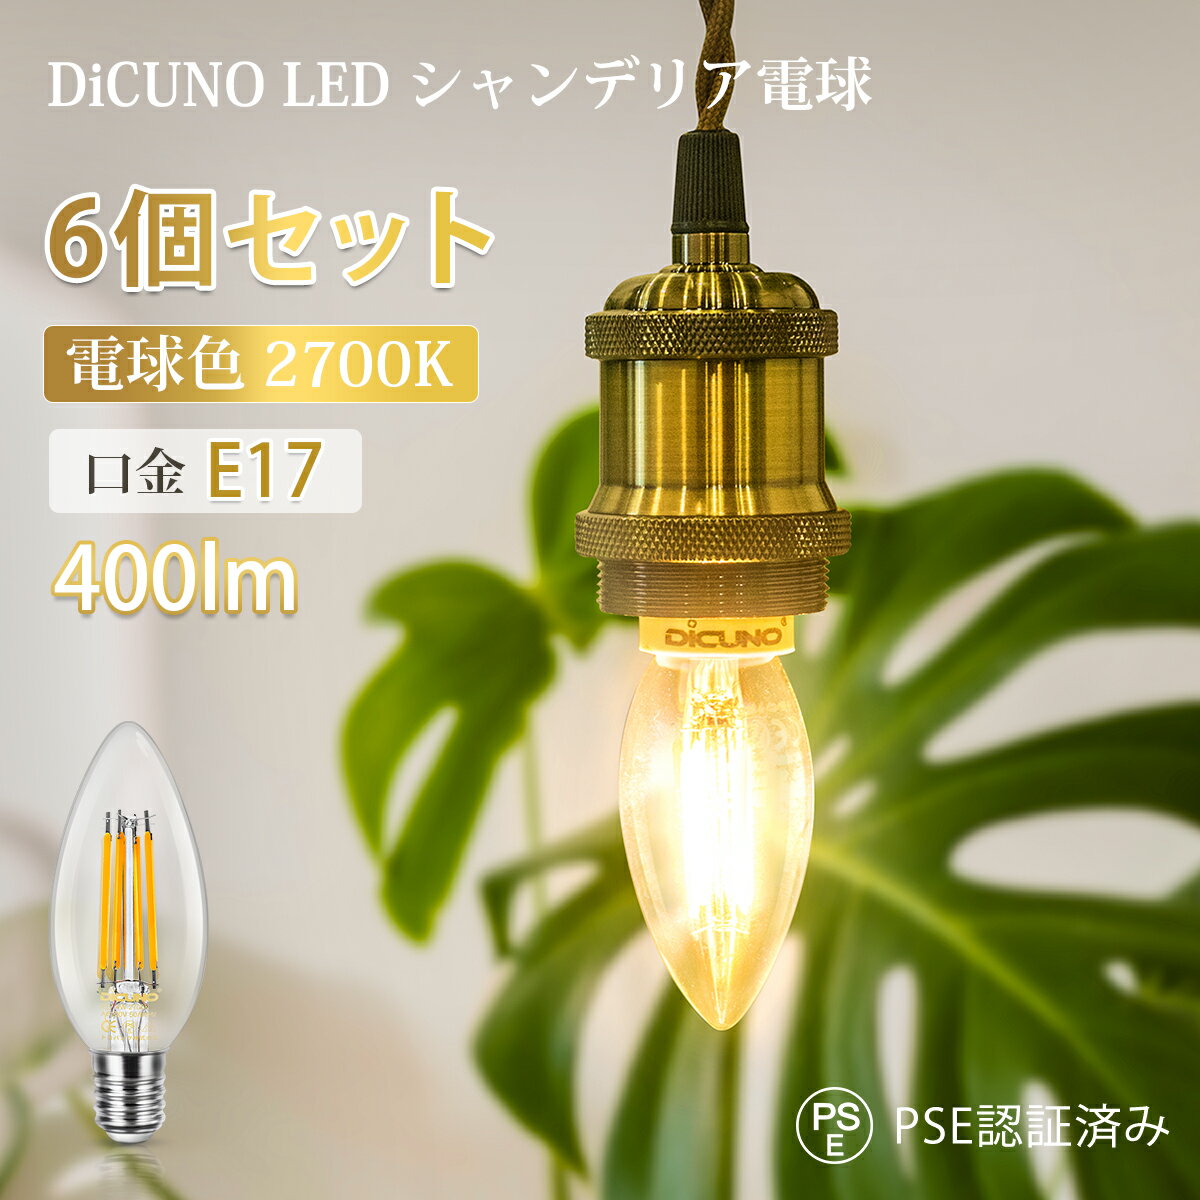 DiCUNO LED電球 E17 40W形相当 電球色 フィラメント電球 エジソン電球 4W 400lm 2700K 蝋燭型 裸電球 レトロ クリアタイプ 広配光 おしゃれ照明 家庭照明 店舗照明 リビング ダイニング デスクライト